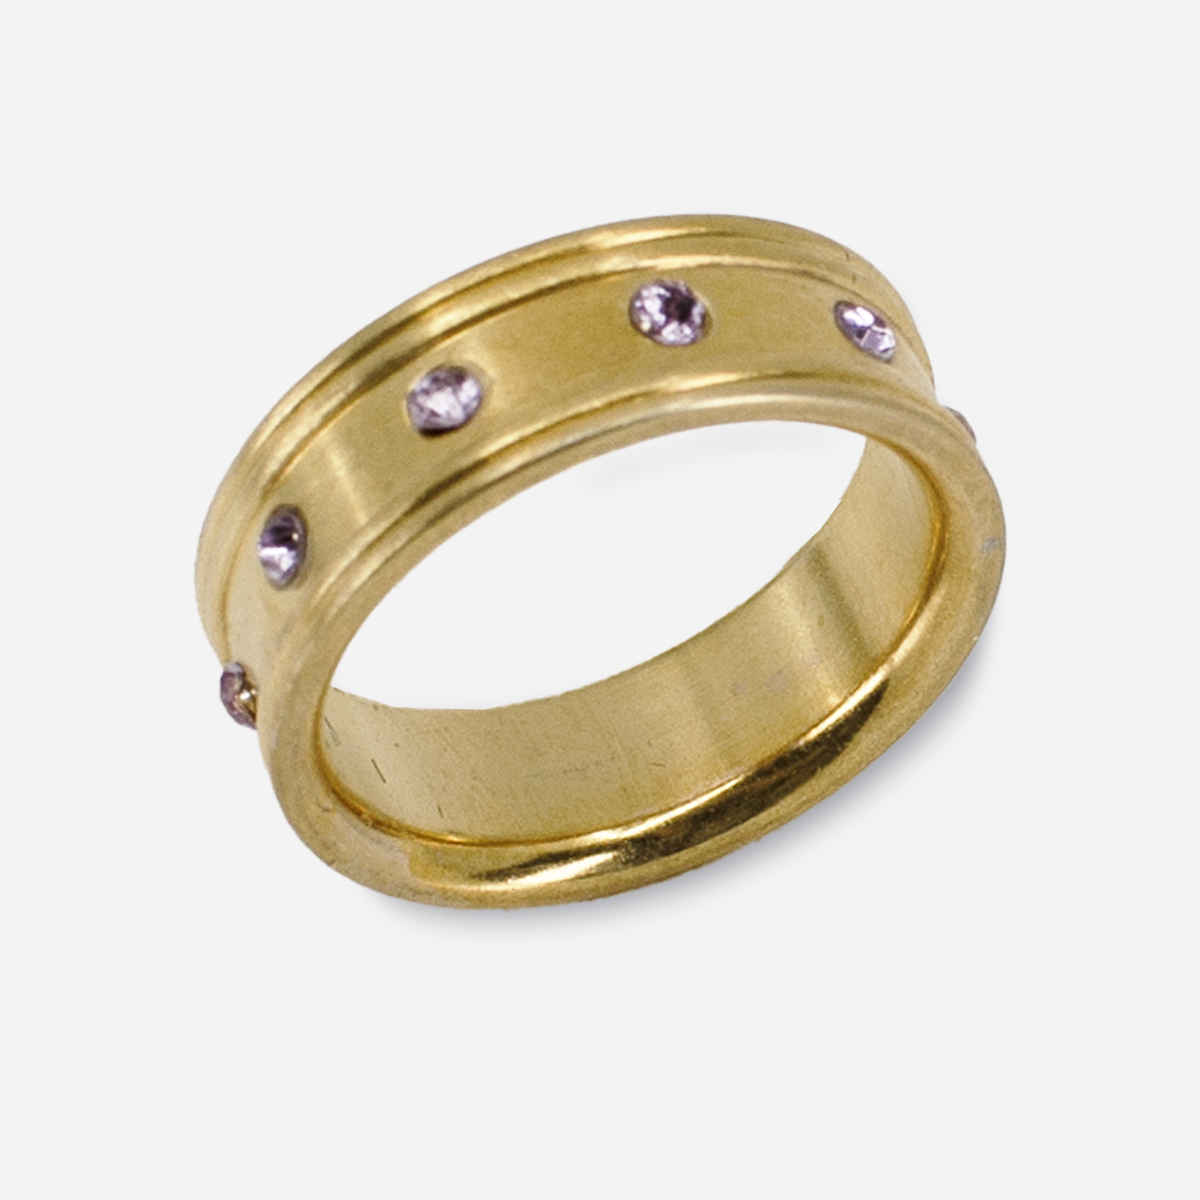 Vintage gold band ring